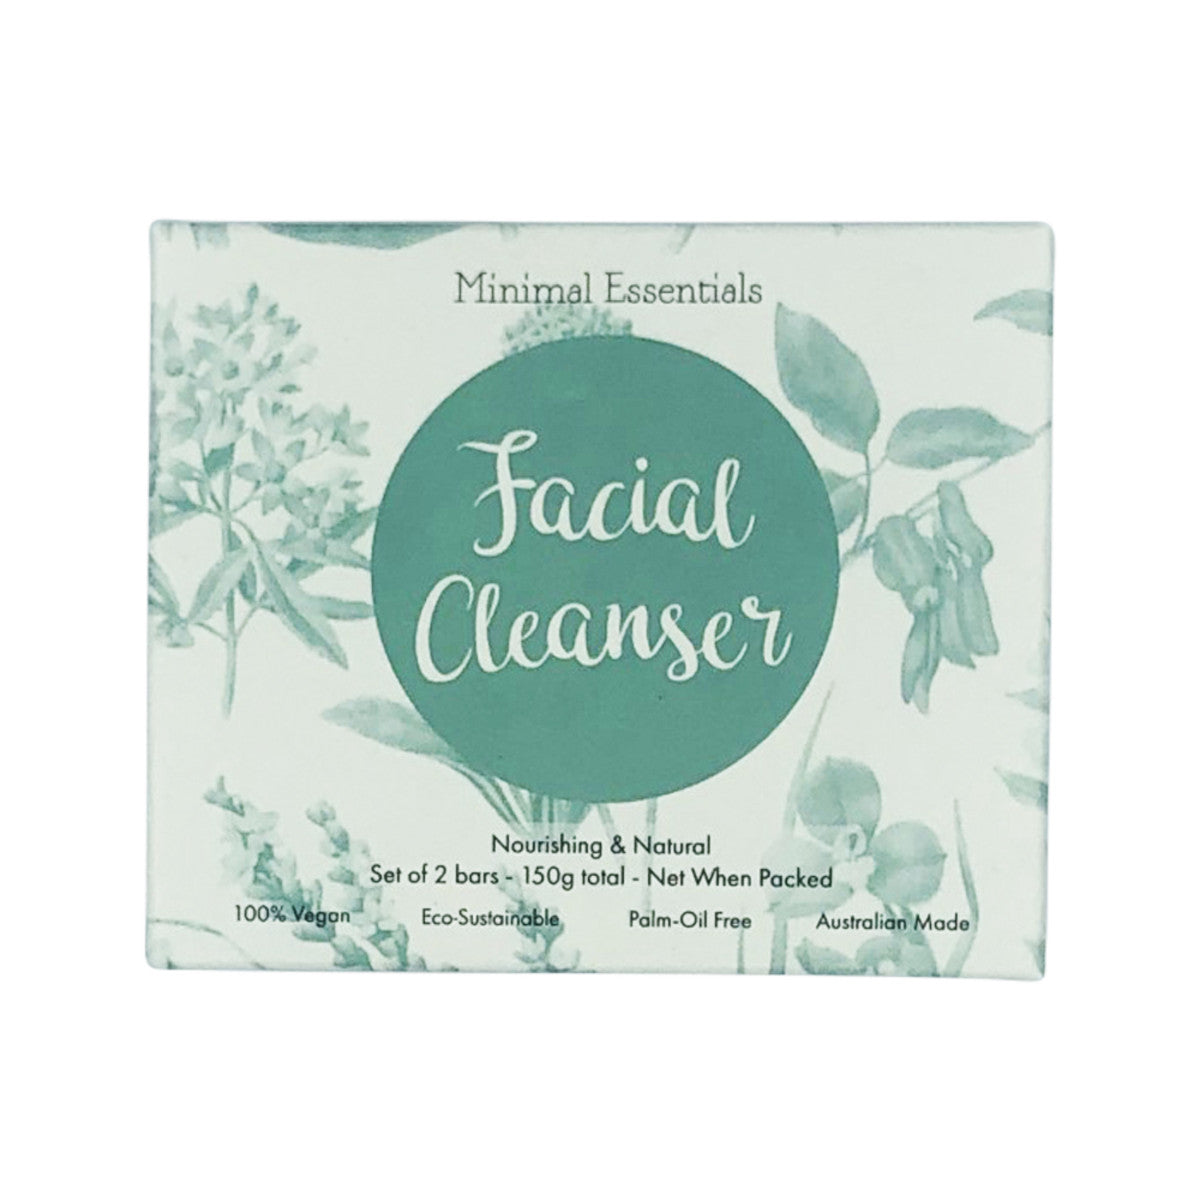 Minimal Essentials - Facial Cleansing Bar (Nourishing & Natural) x 2 Pack